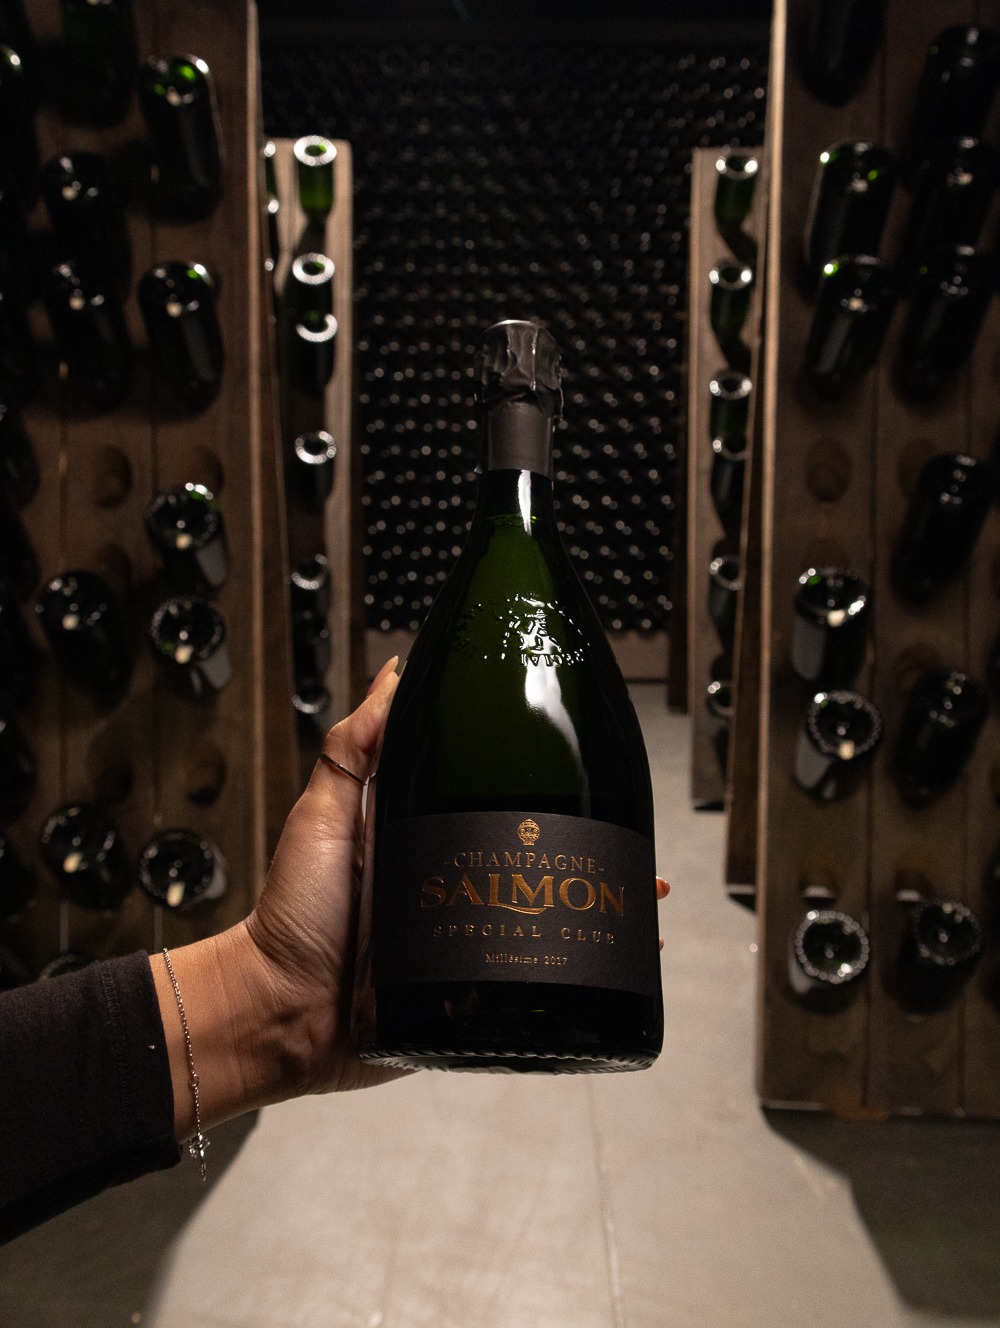 Champagne Salmon Blanc de Noirs Special Club Brut Nature 2017